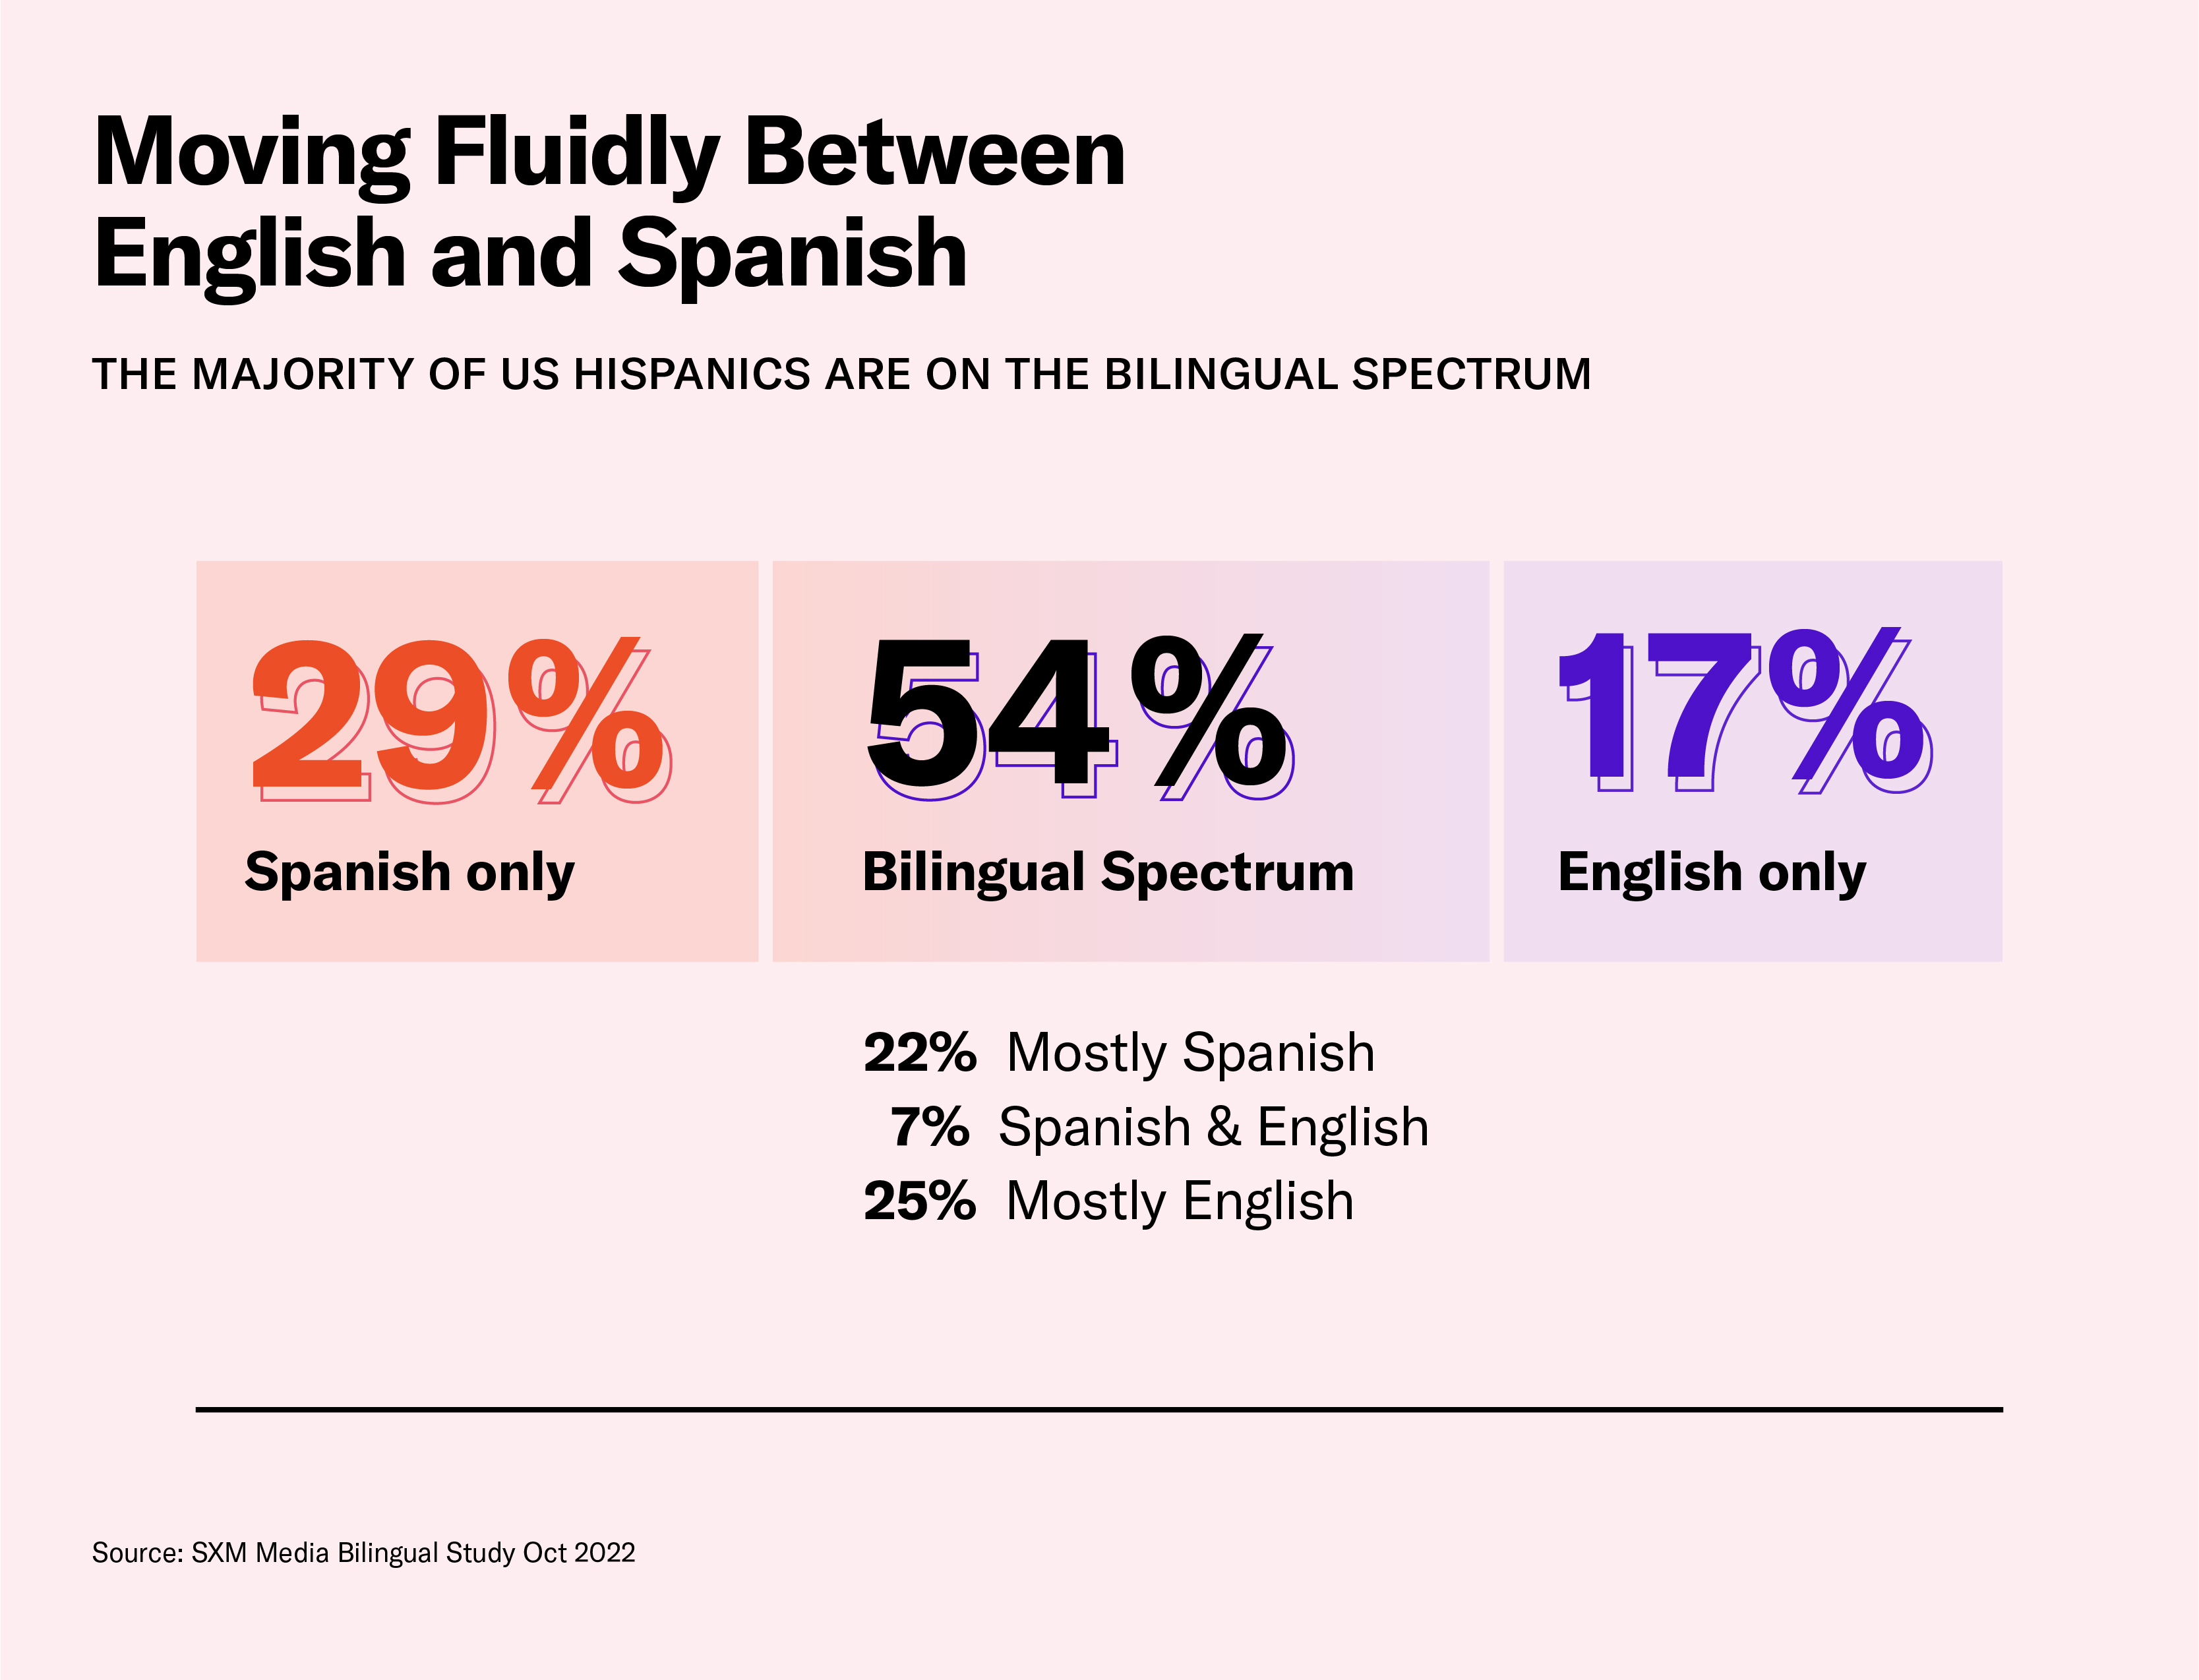 54% of Hispanic Americans are Bilingual